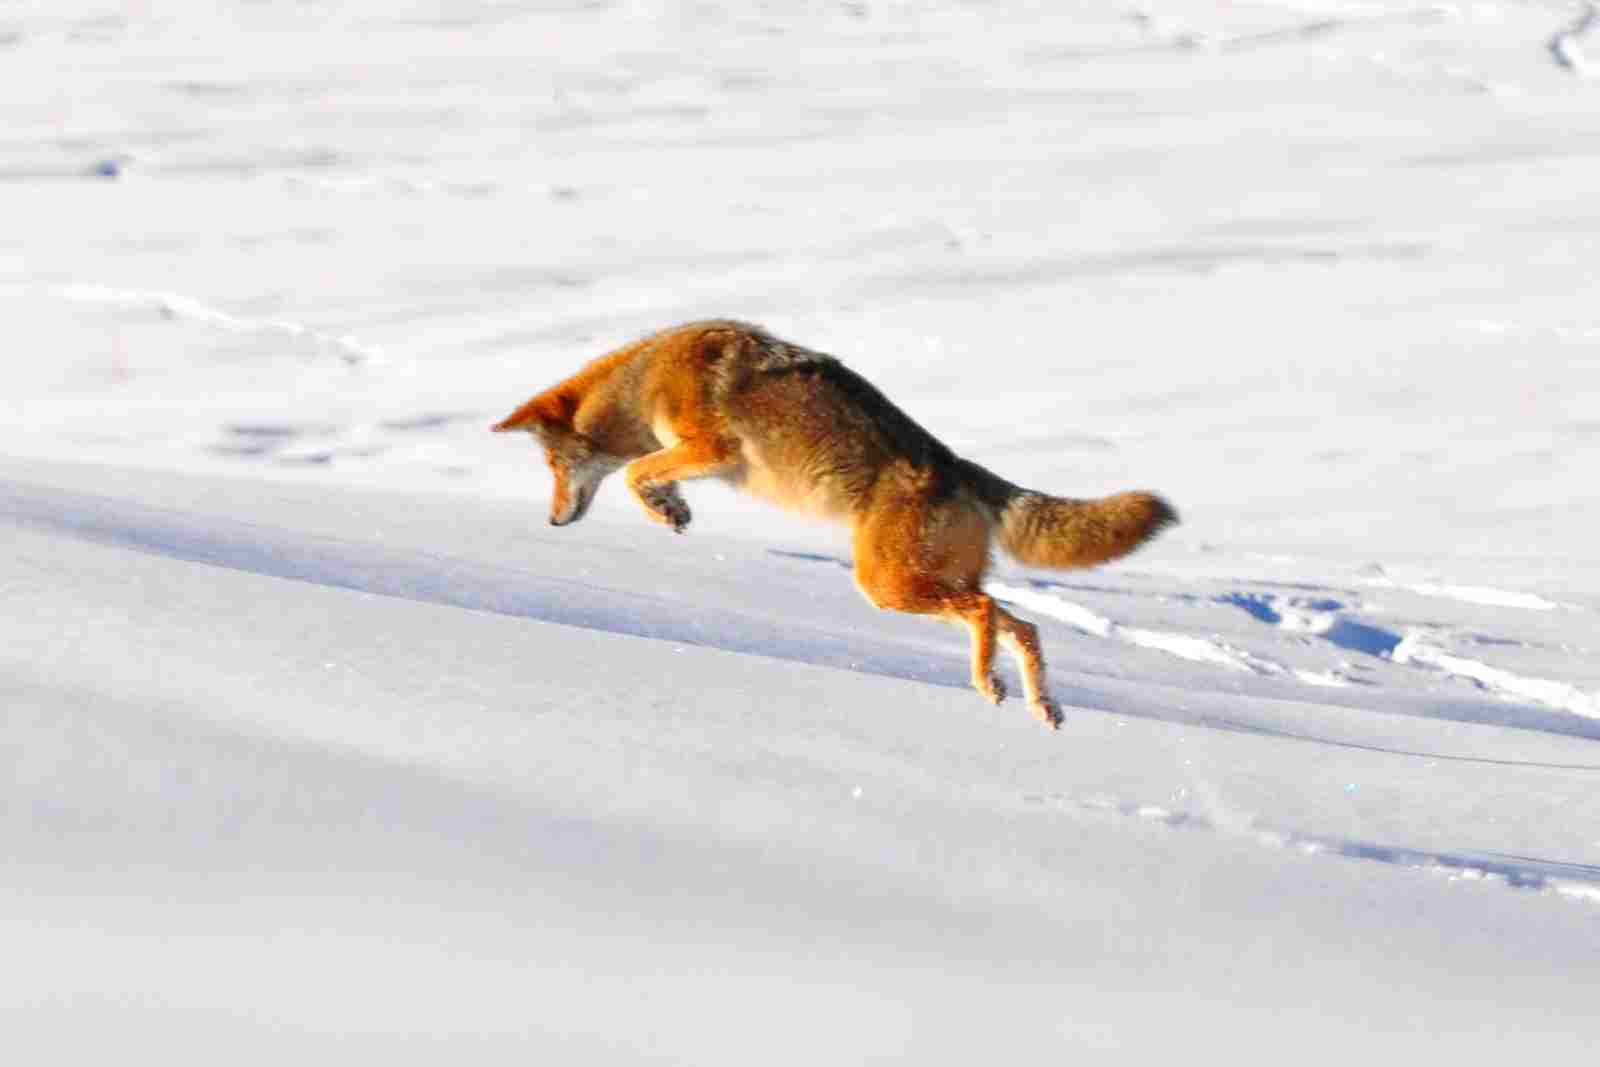 coyote vs red fox